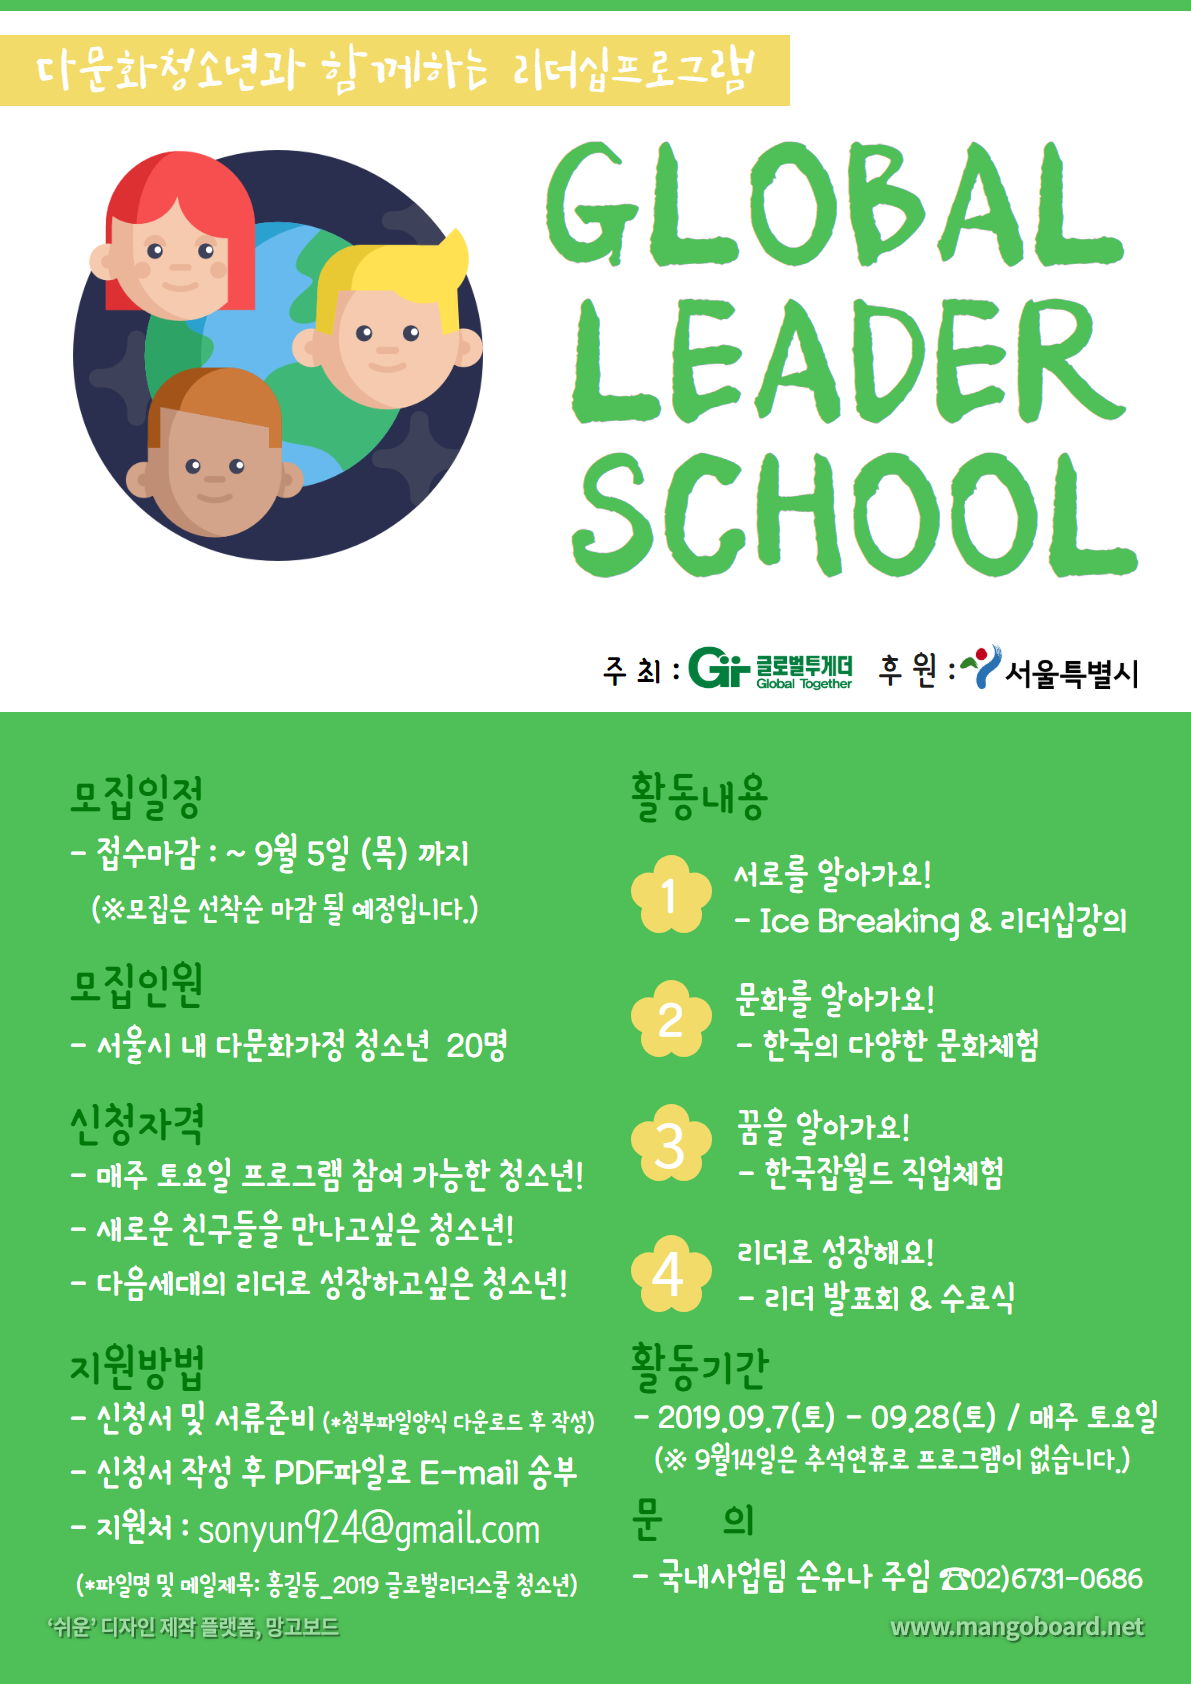 1. 2019 Global Leader School 청소년 모집 포스터.png